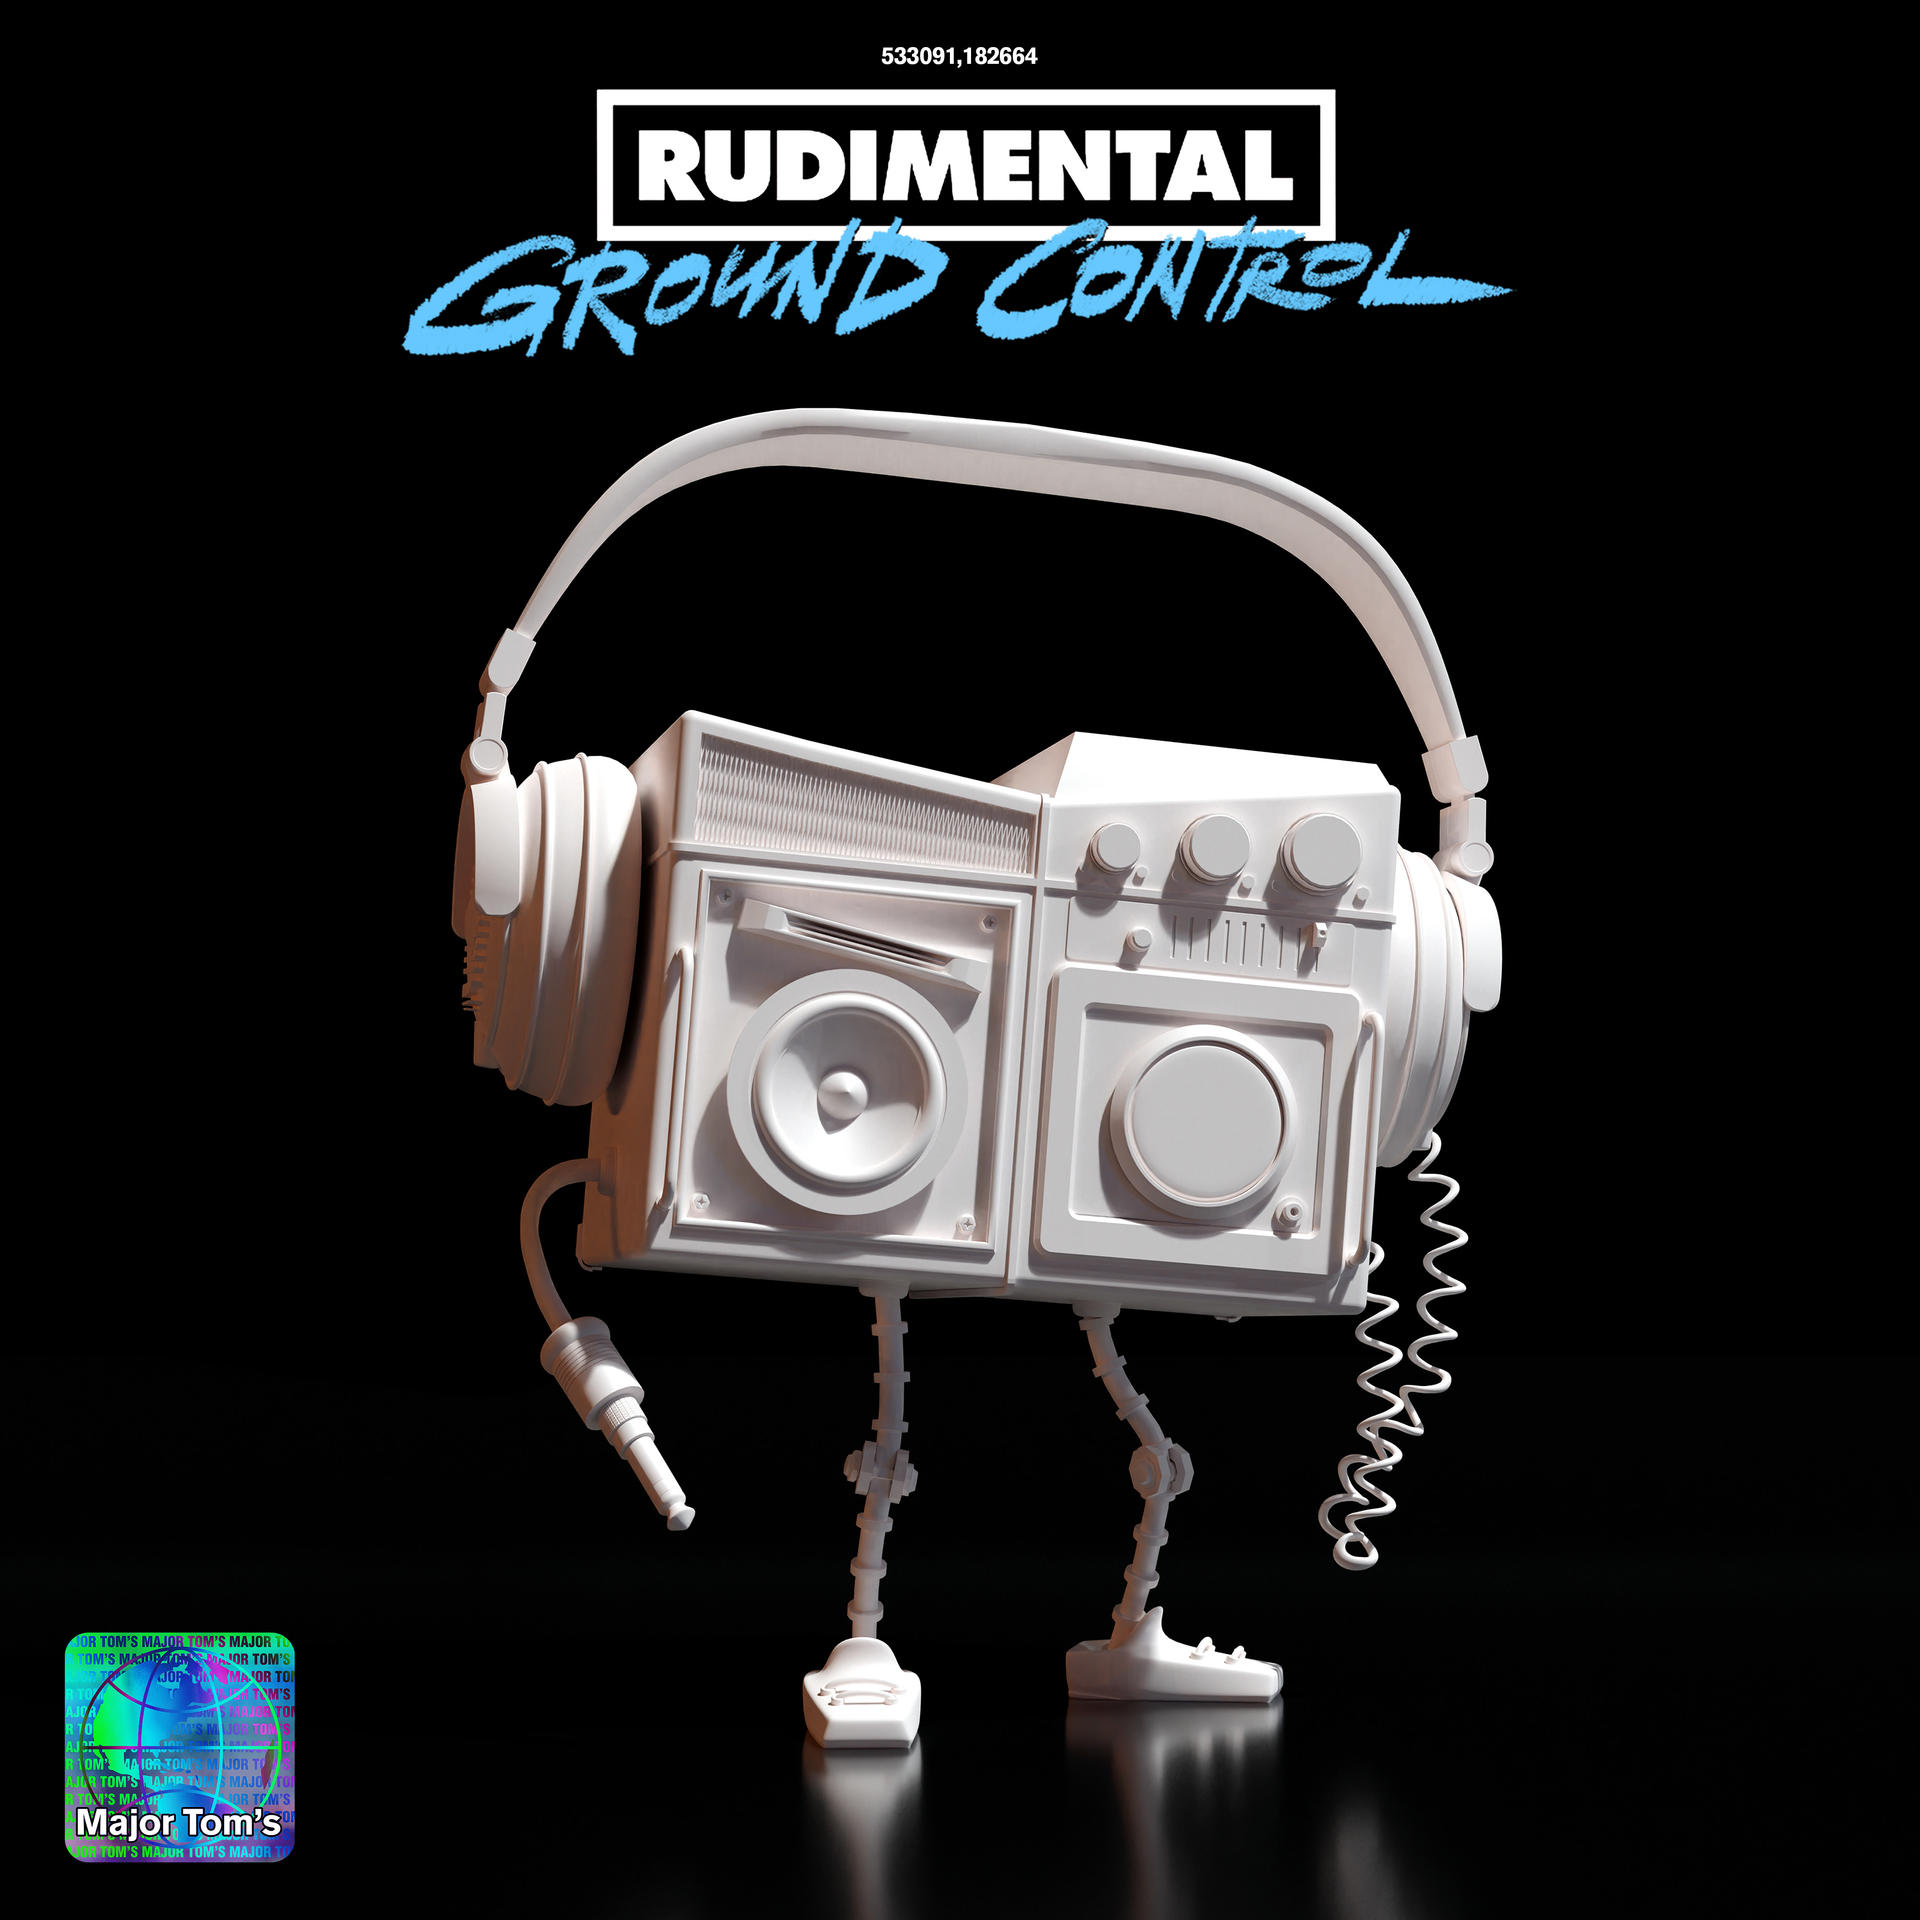 Rudimental - - CONTROL GROUND (Vinyl)